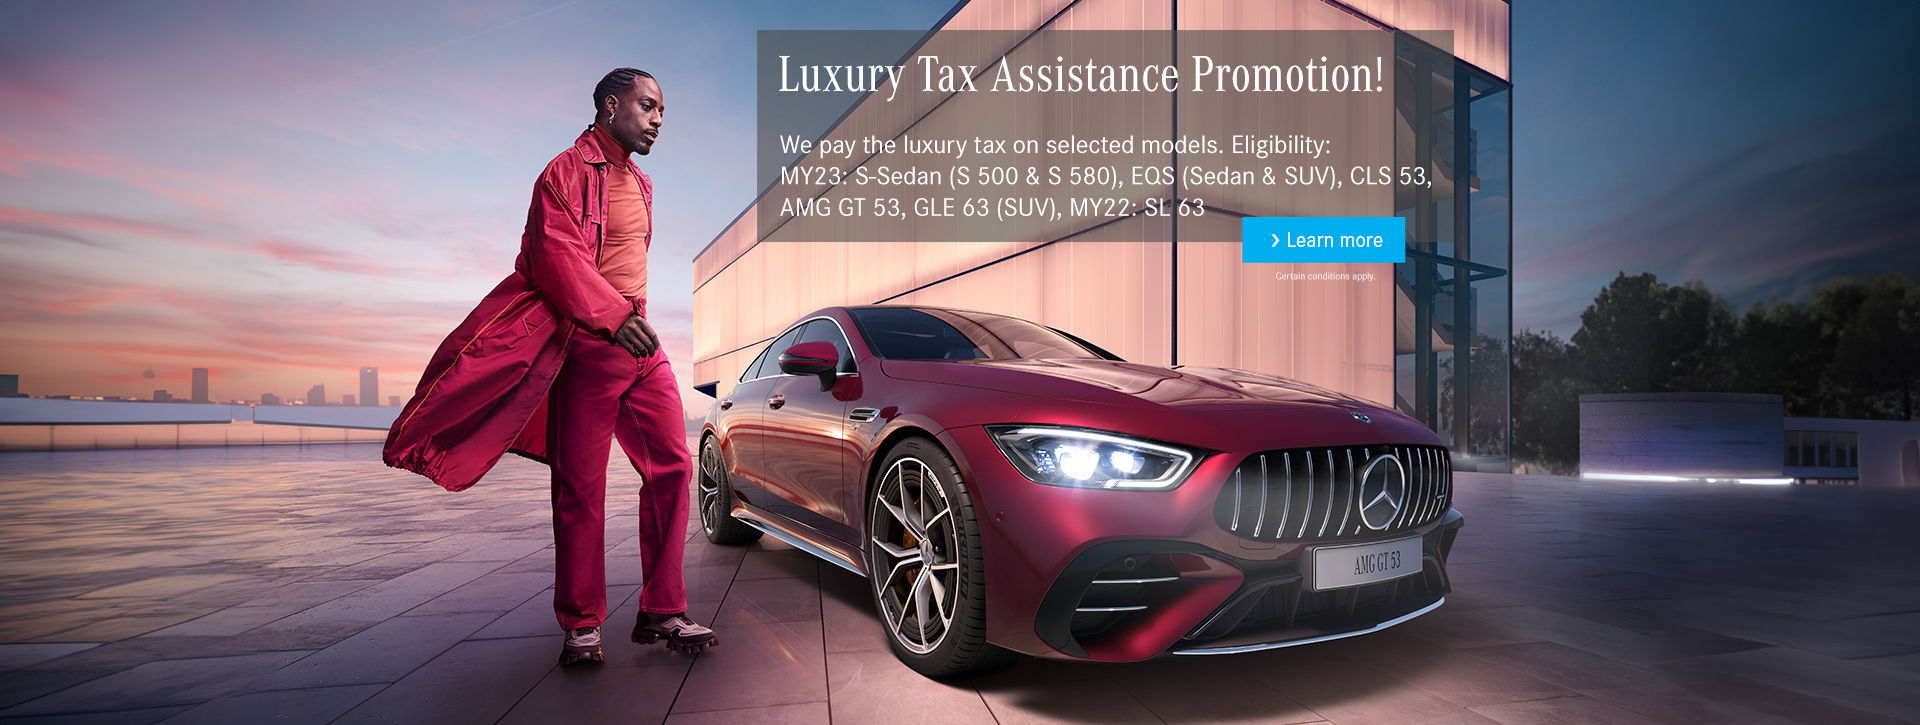 Luxury tax promotion header